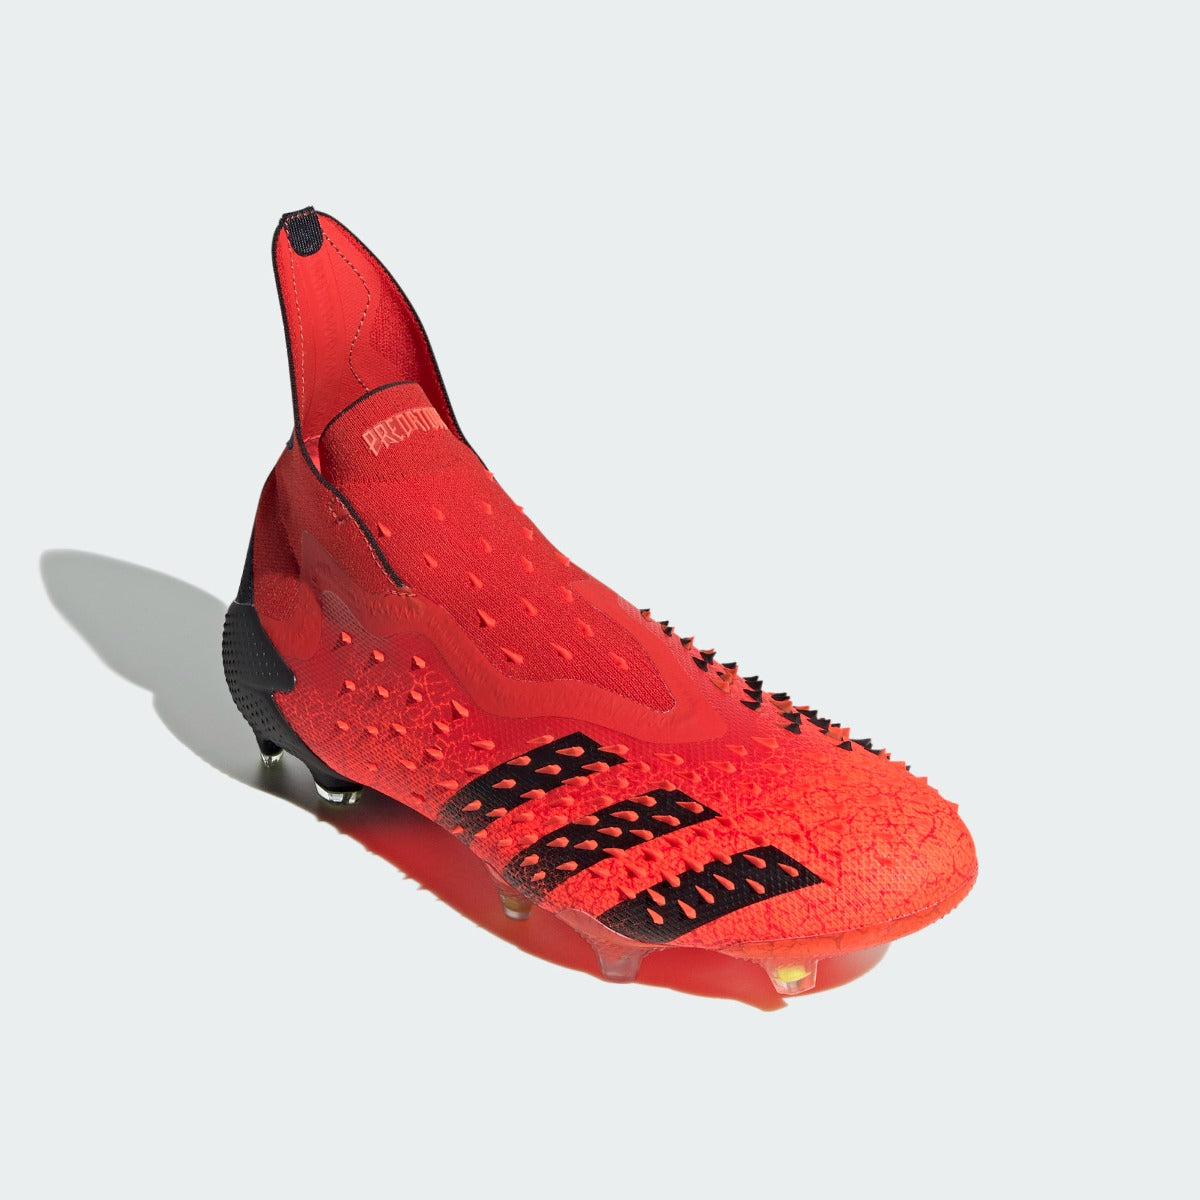 Adidas Predator Freak + FG - Red-Black (Diagonal 1)